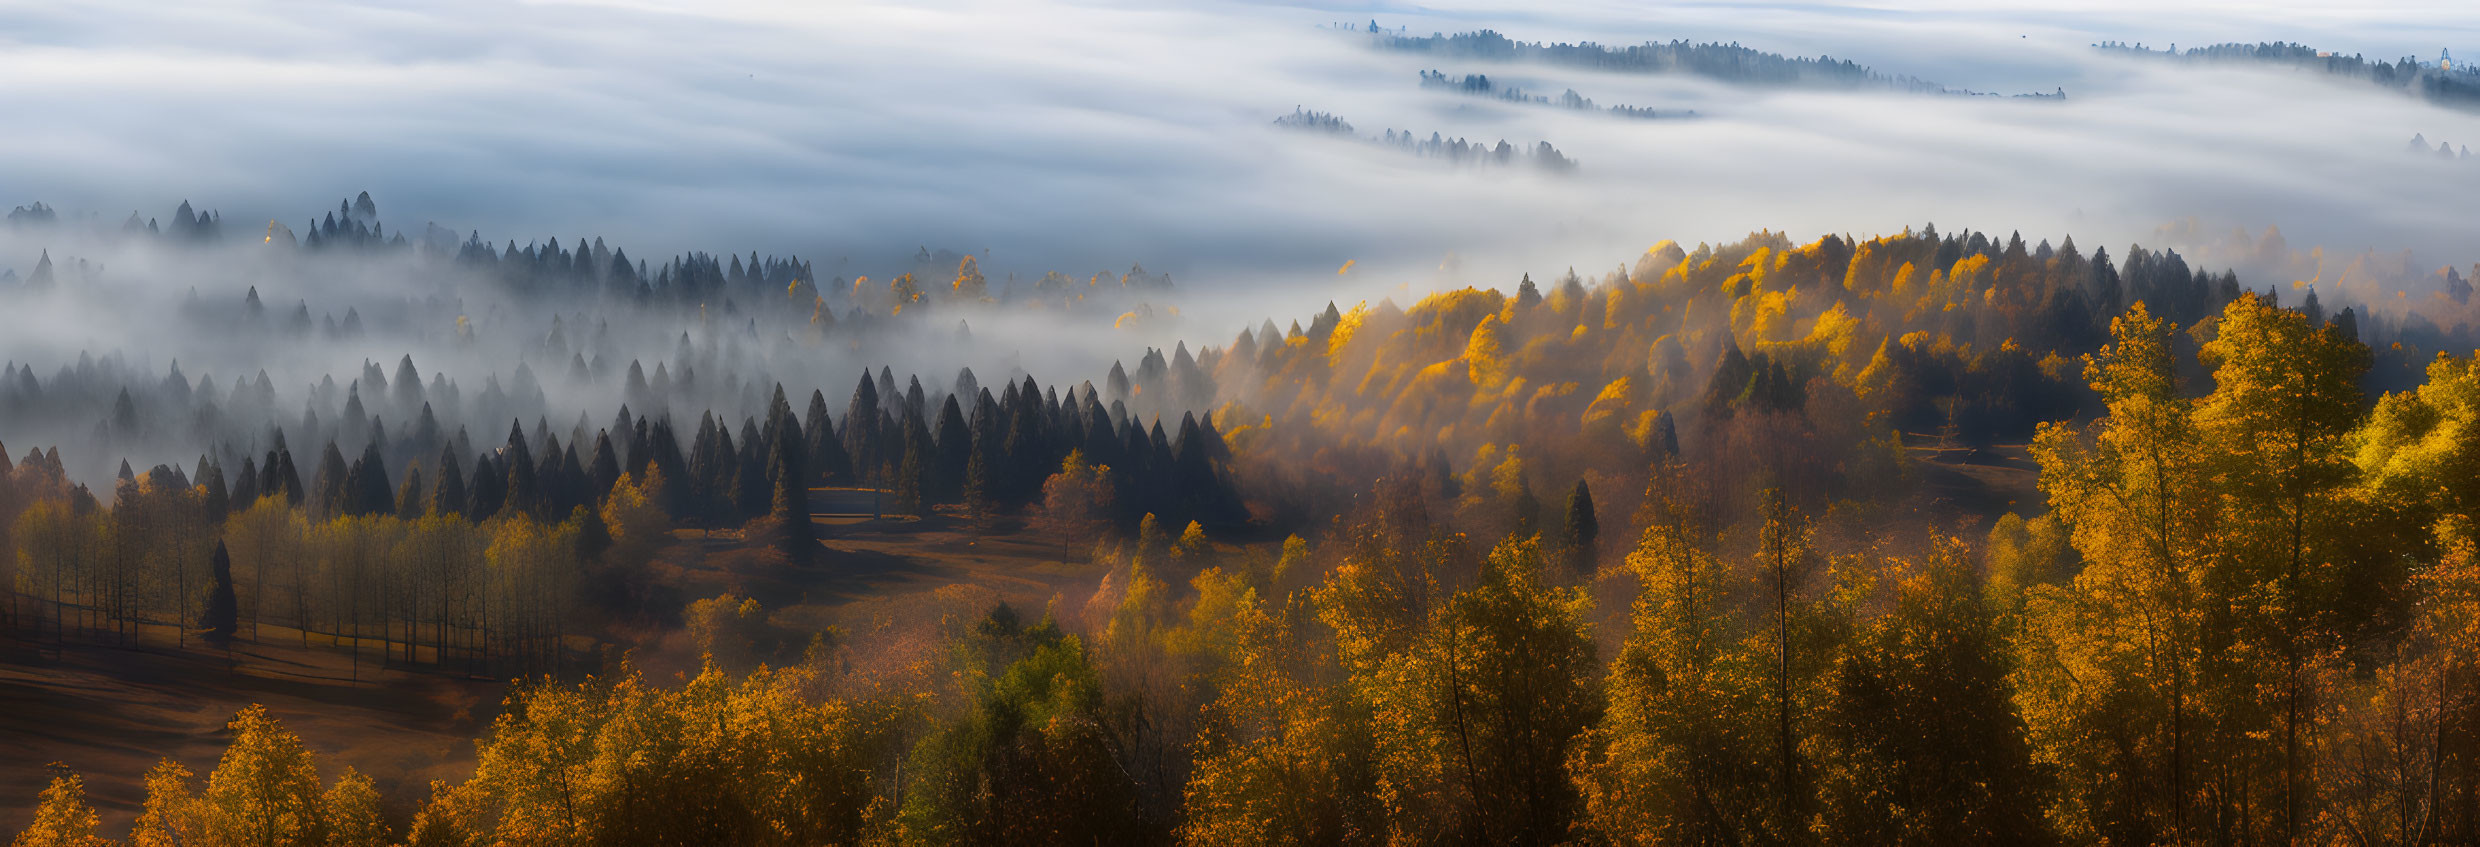 Fog covered forest